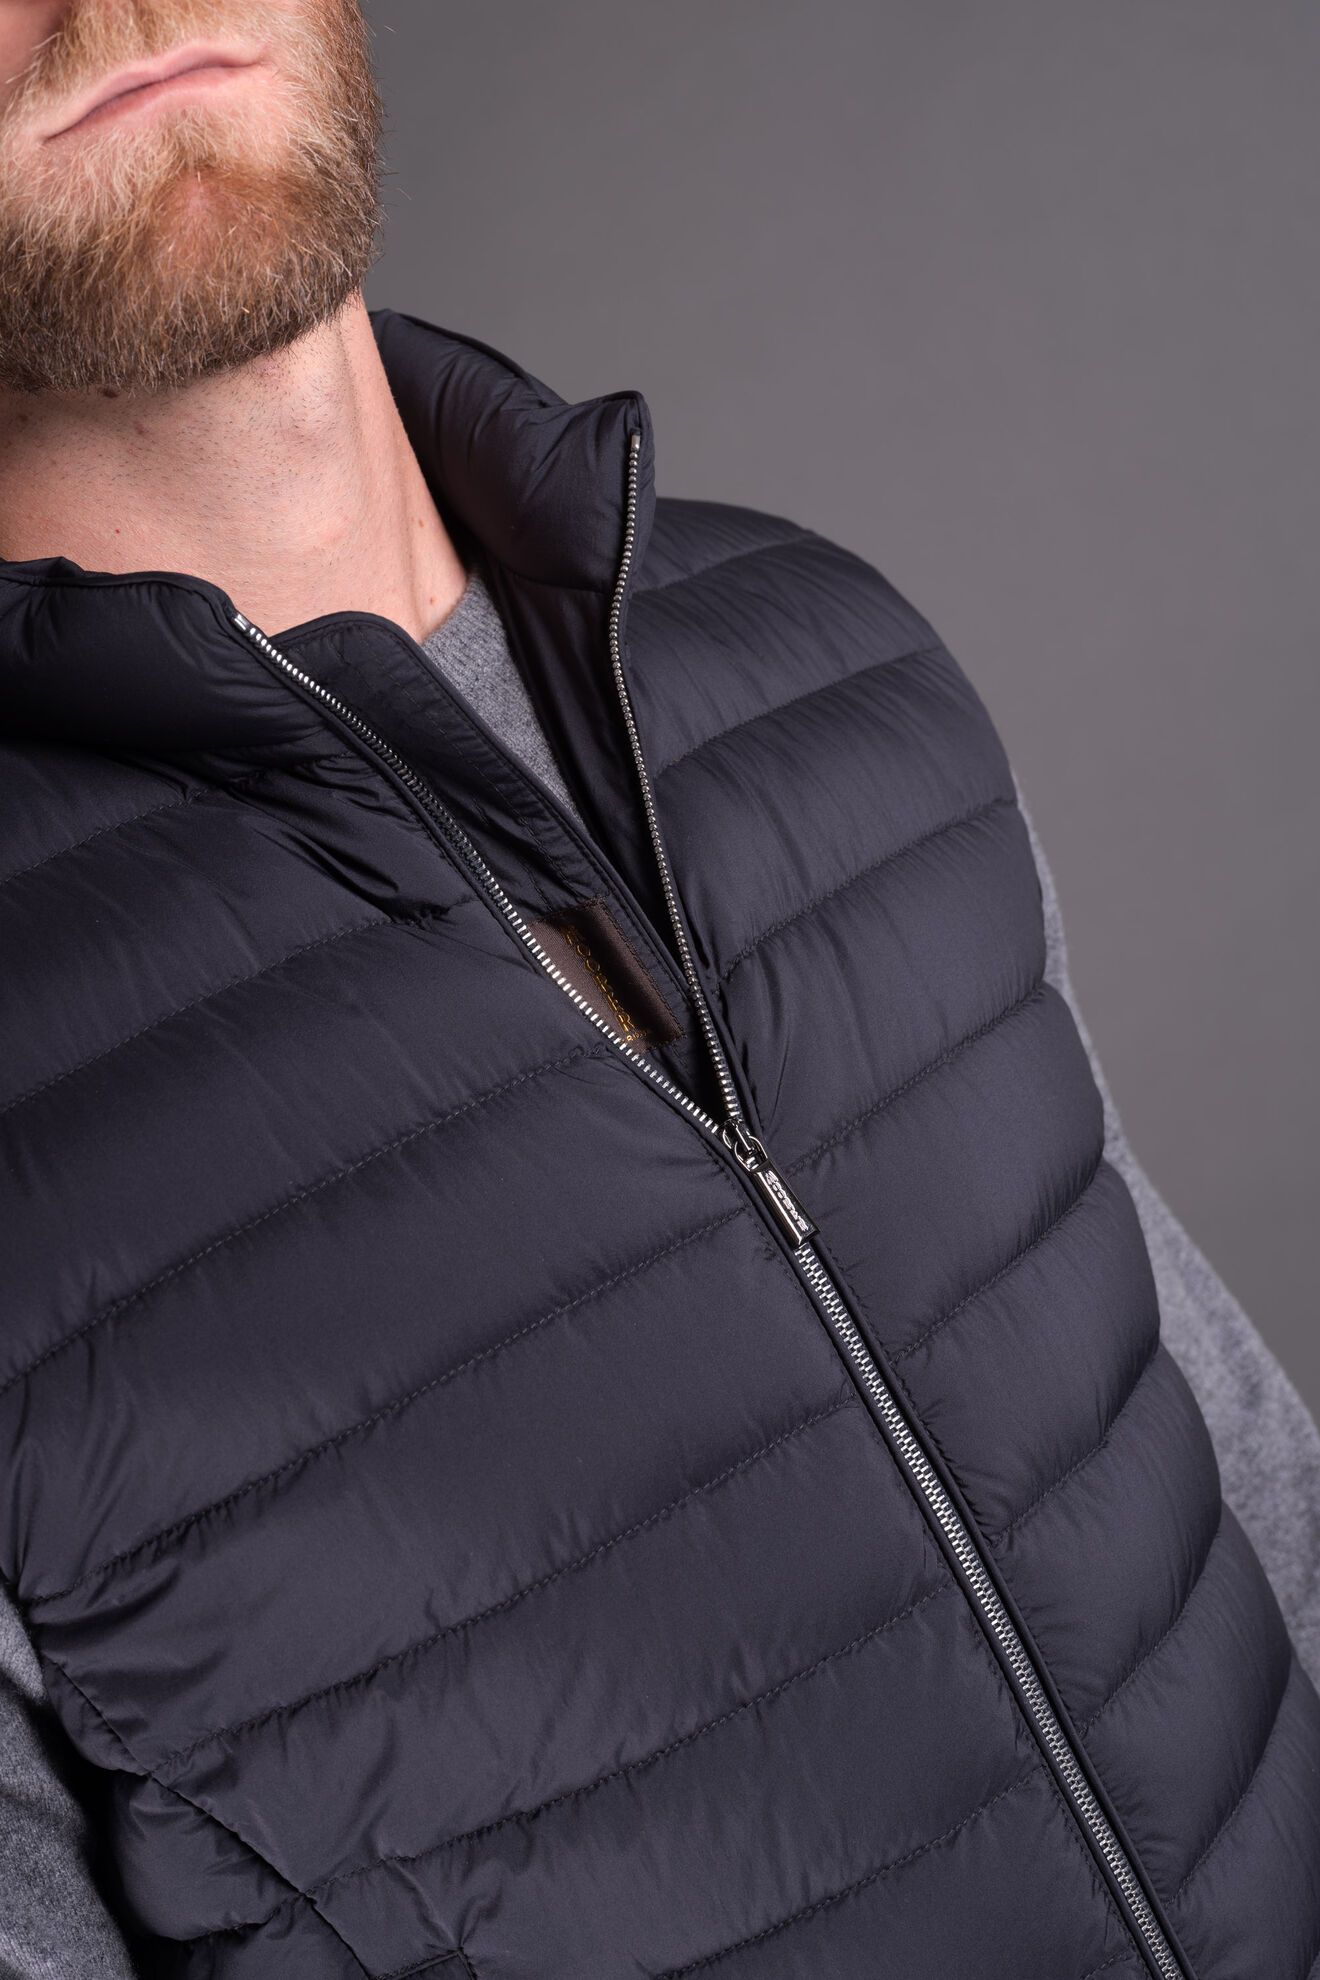 CALAF-S3 in DARK BLU: Luxury Italian Jackets for Men | MooRER®